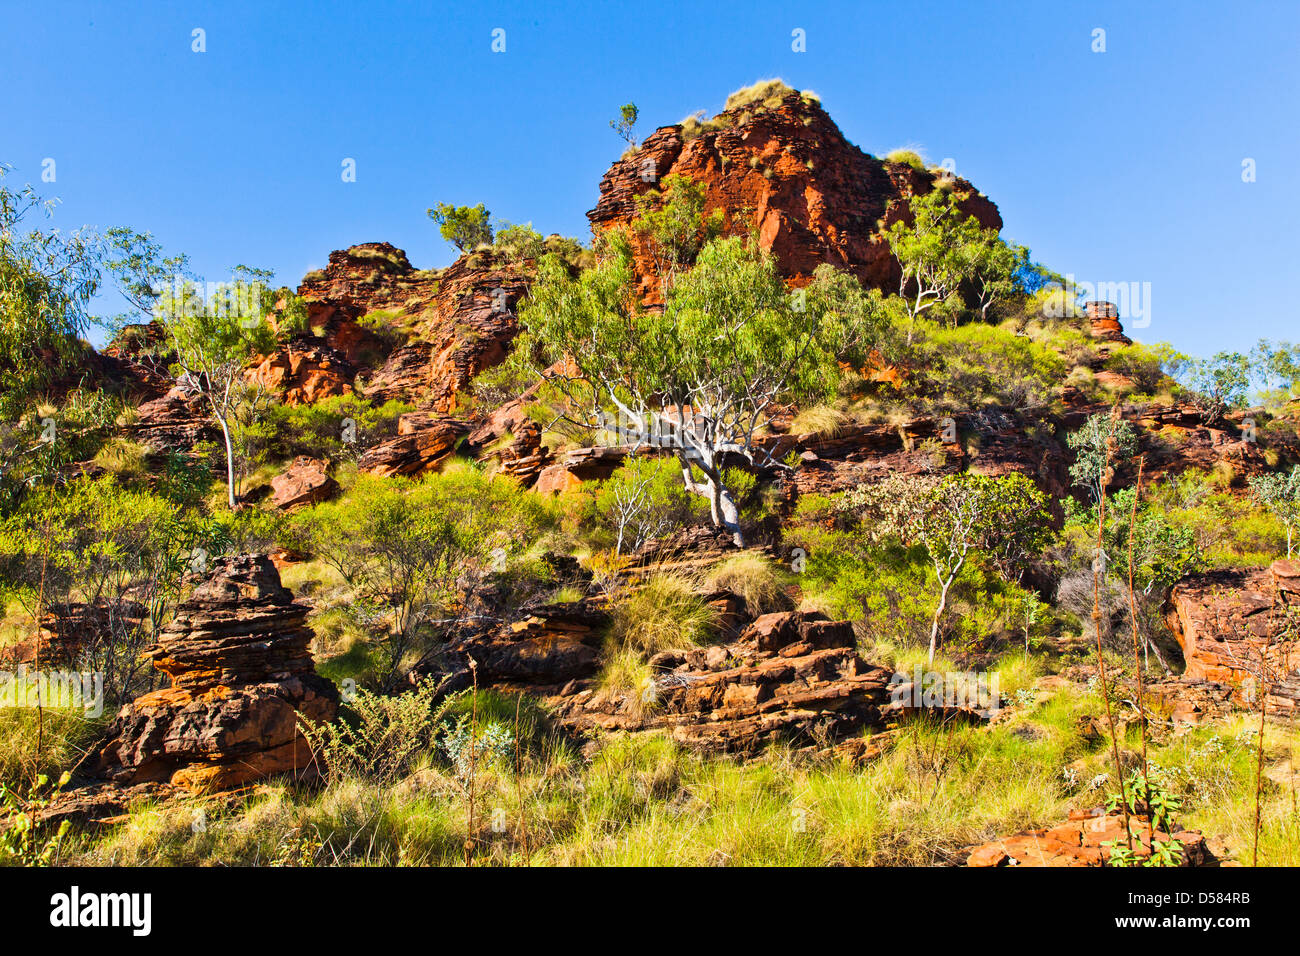 Australia, Western Australia, Kununurra, rugged sculptured sandstone formations at Mirima, Hidden Valley National Park Stock Photo